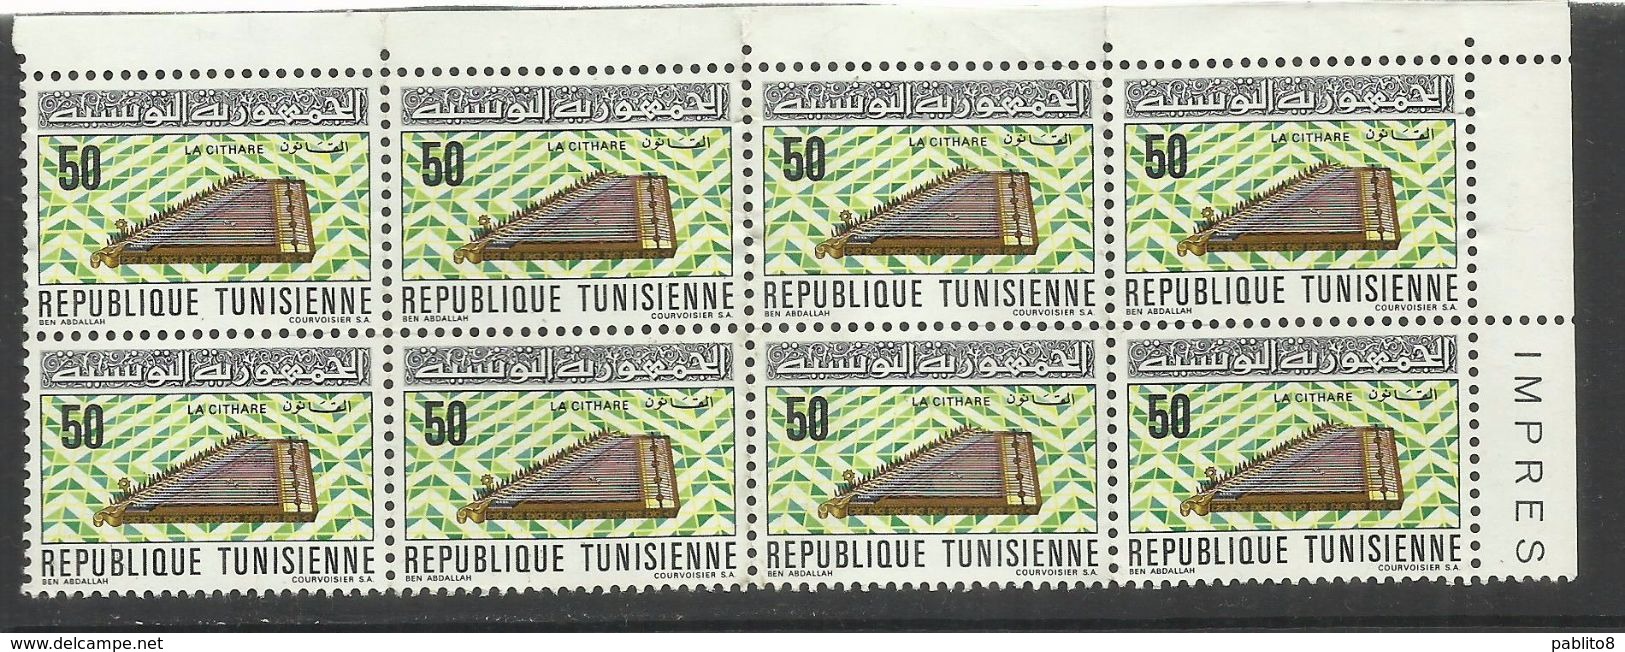 TUNISIA TUNISIE REPUBLIQUE TUNISIENNE 1970 MUSIC INSTRUMENTS Zither LA CHITARE BLOCK BLOC 50m MNH - Tunisia (1956-...)